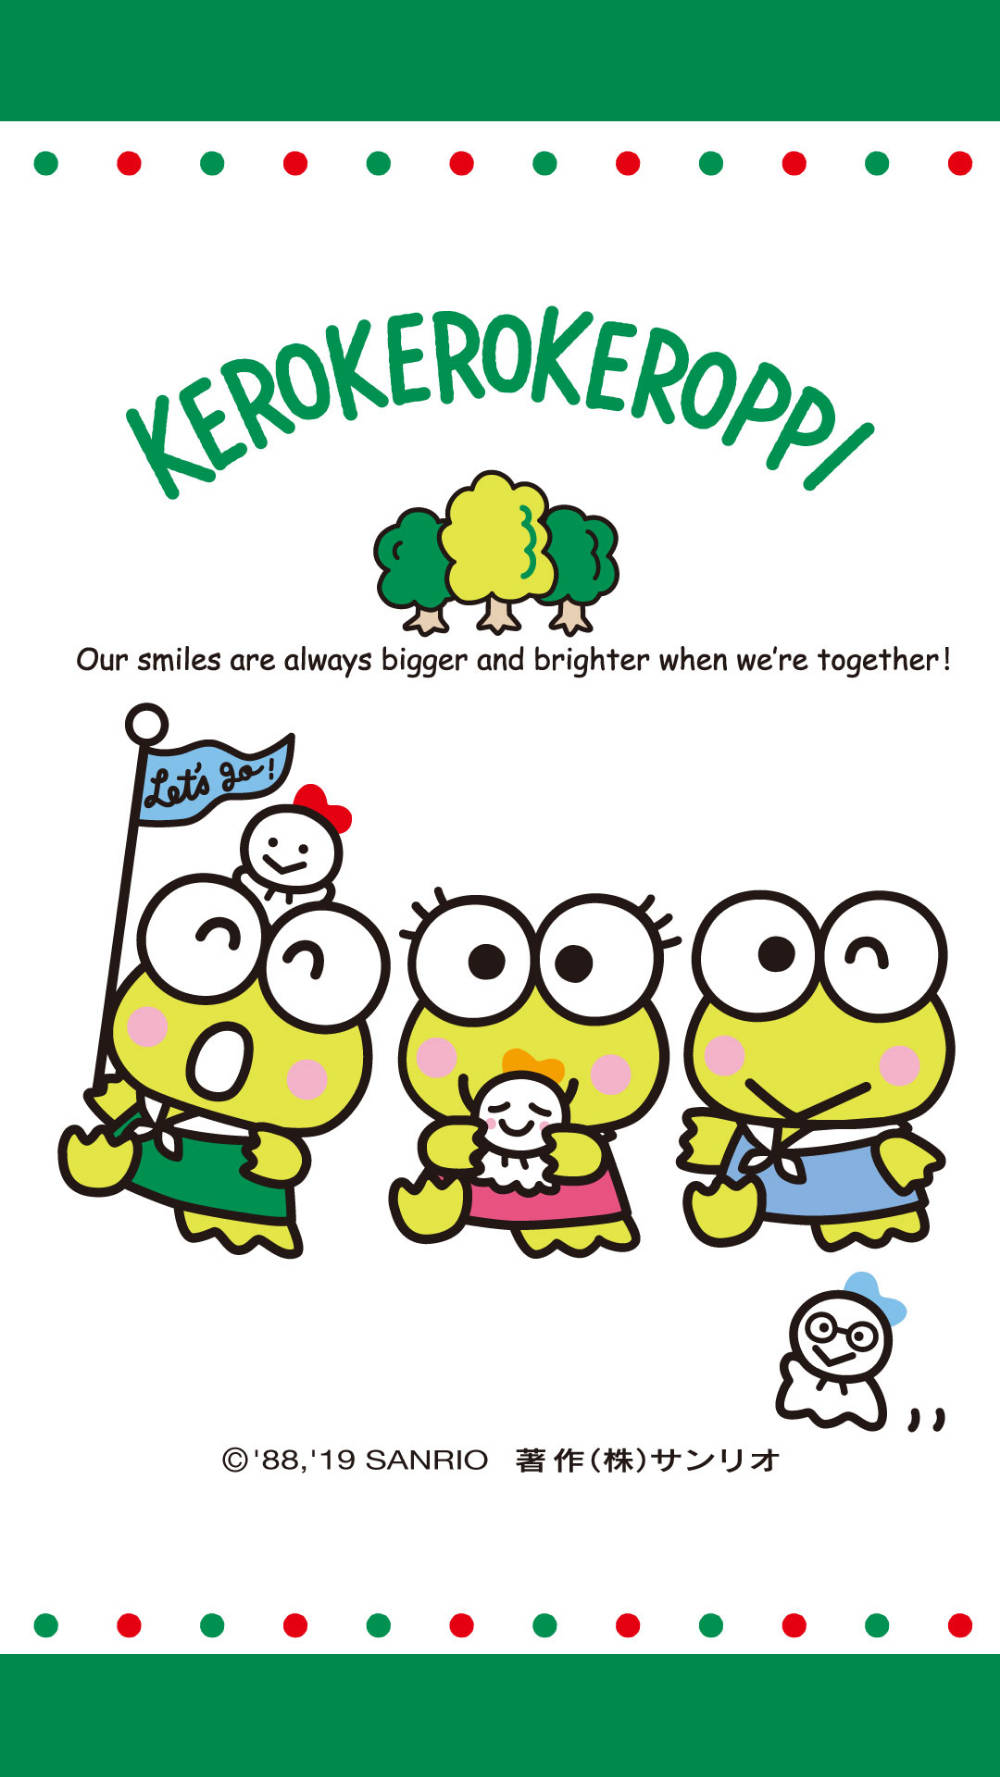 Keroppi Smiles Bigger And Brighter